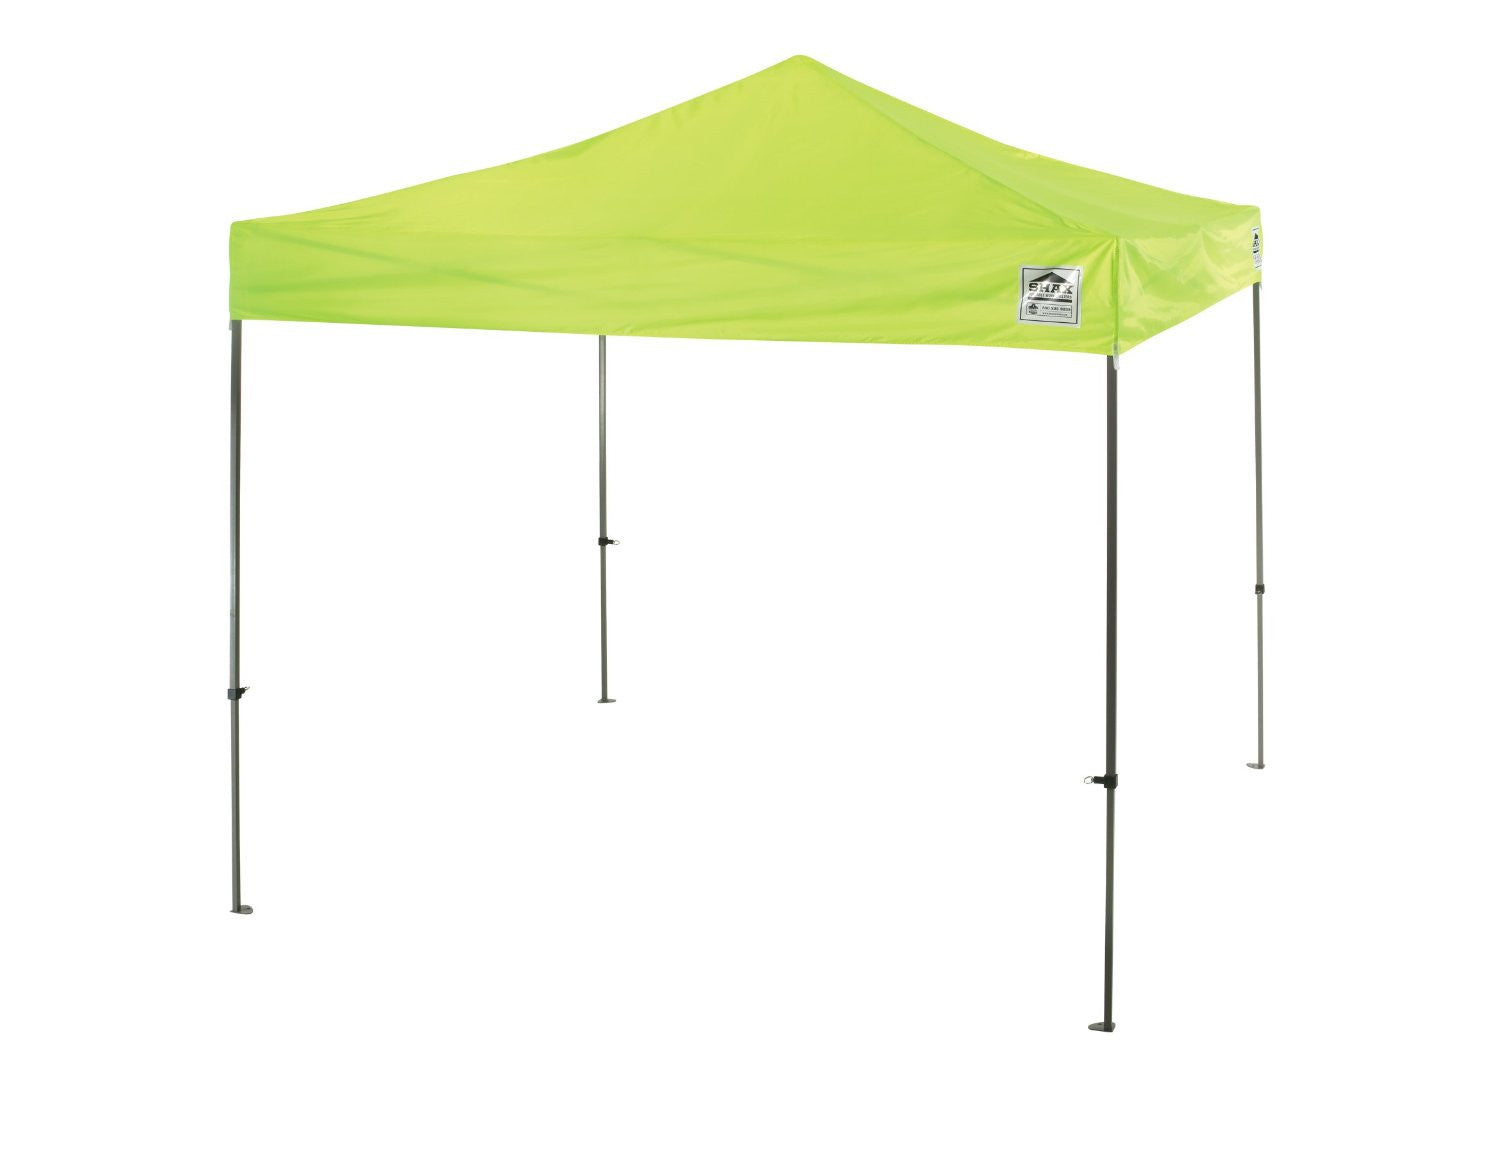 Ergodyne Shax 6010 Lightweight Tent, 10' X 10', Lime-eSafety Supplies, Inc